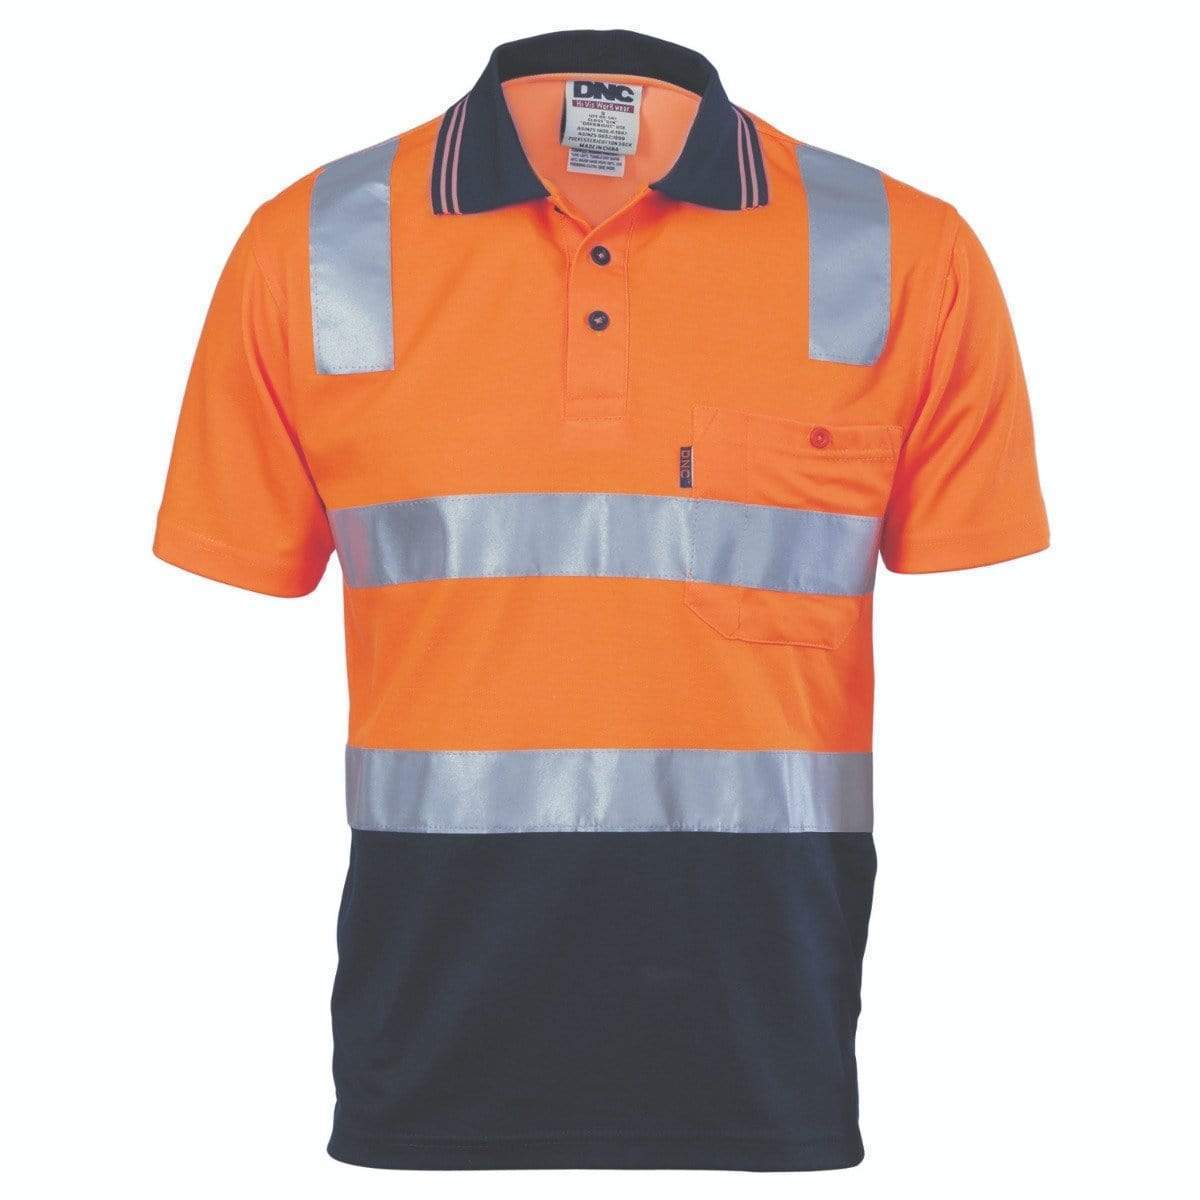 Dnc Workwear Cotton Back Hi-vis Two-tone Short Sleeve Polo Shirt With Csr Reflective Tape - 3817 Work Wear DNC Workwear Orange/Navy 5XL 